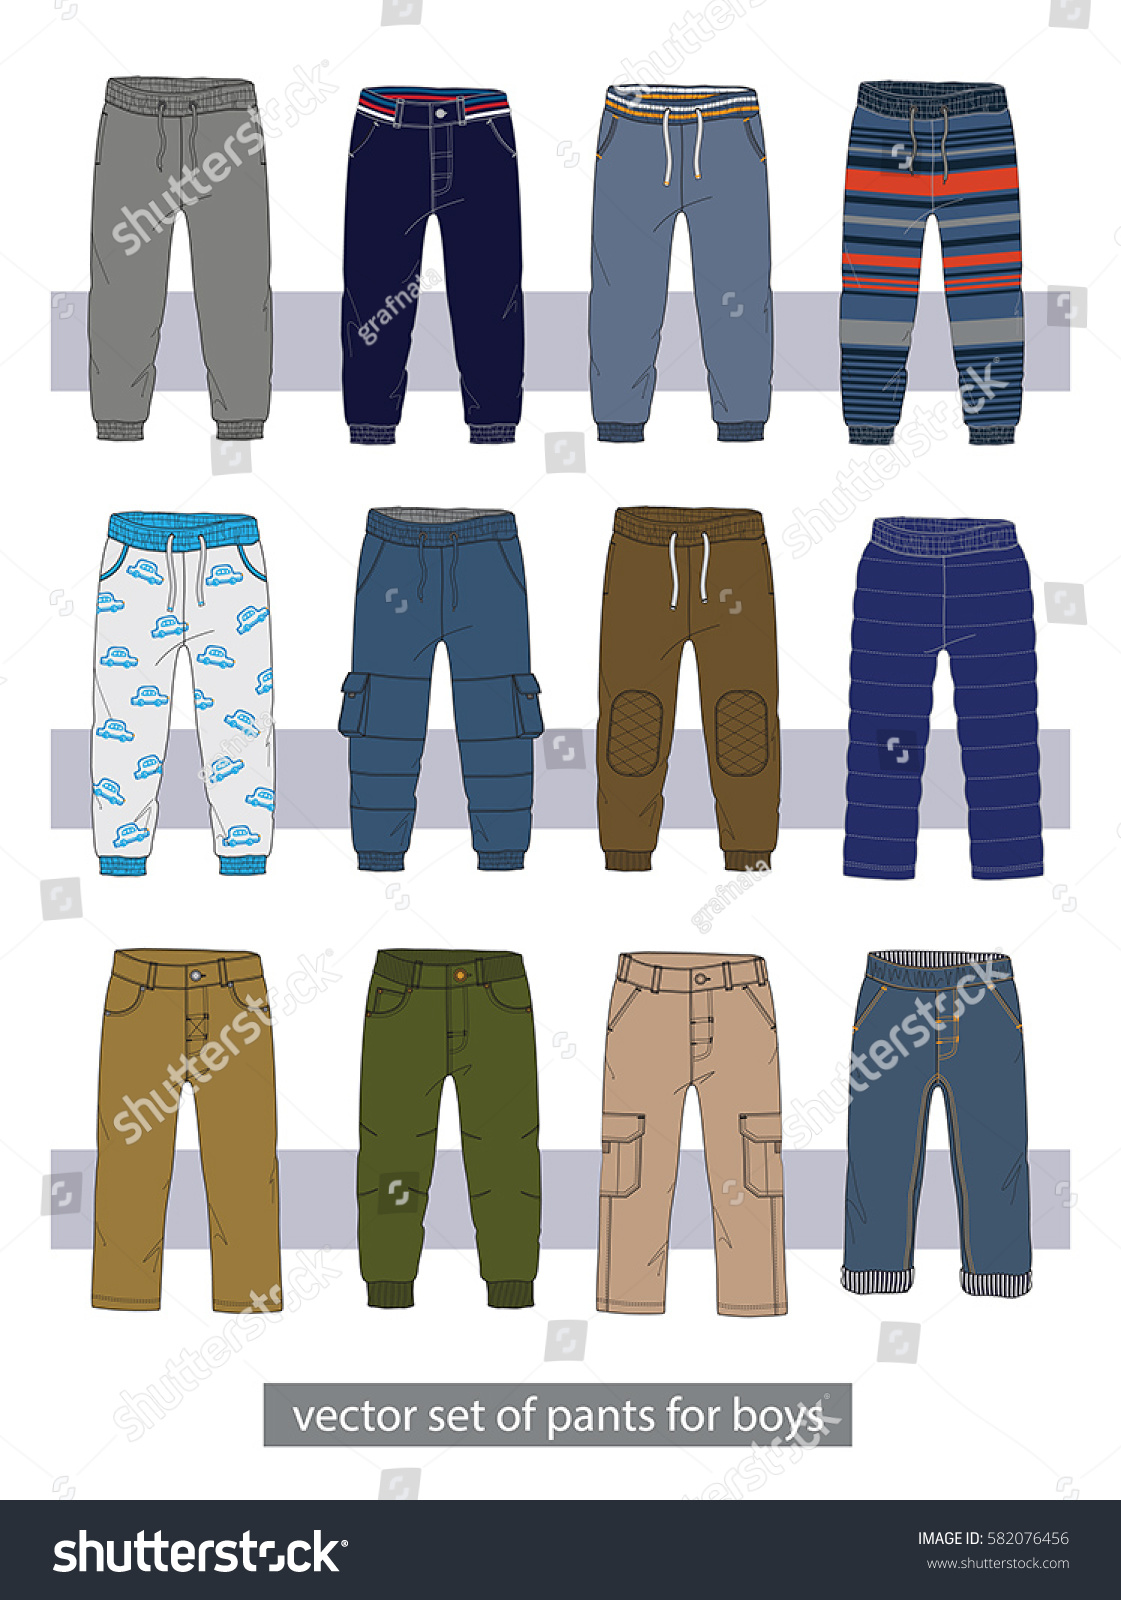 stock-vector-vector-set-of-pants-for-boys-582076456.jpg (1121×1600)